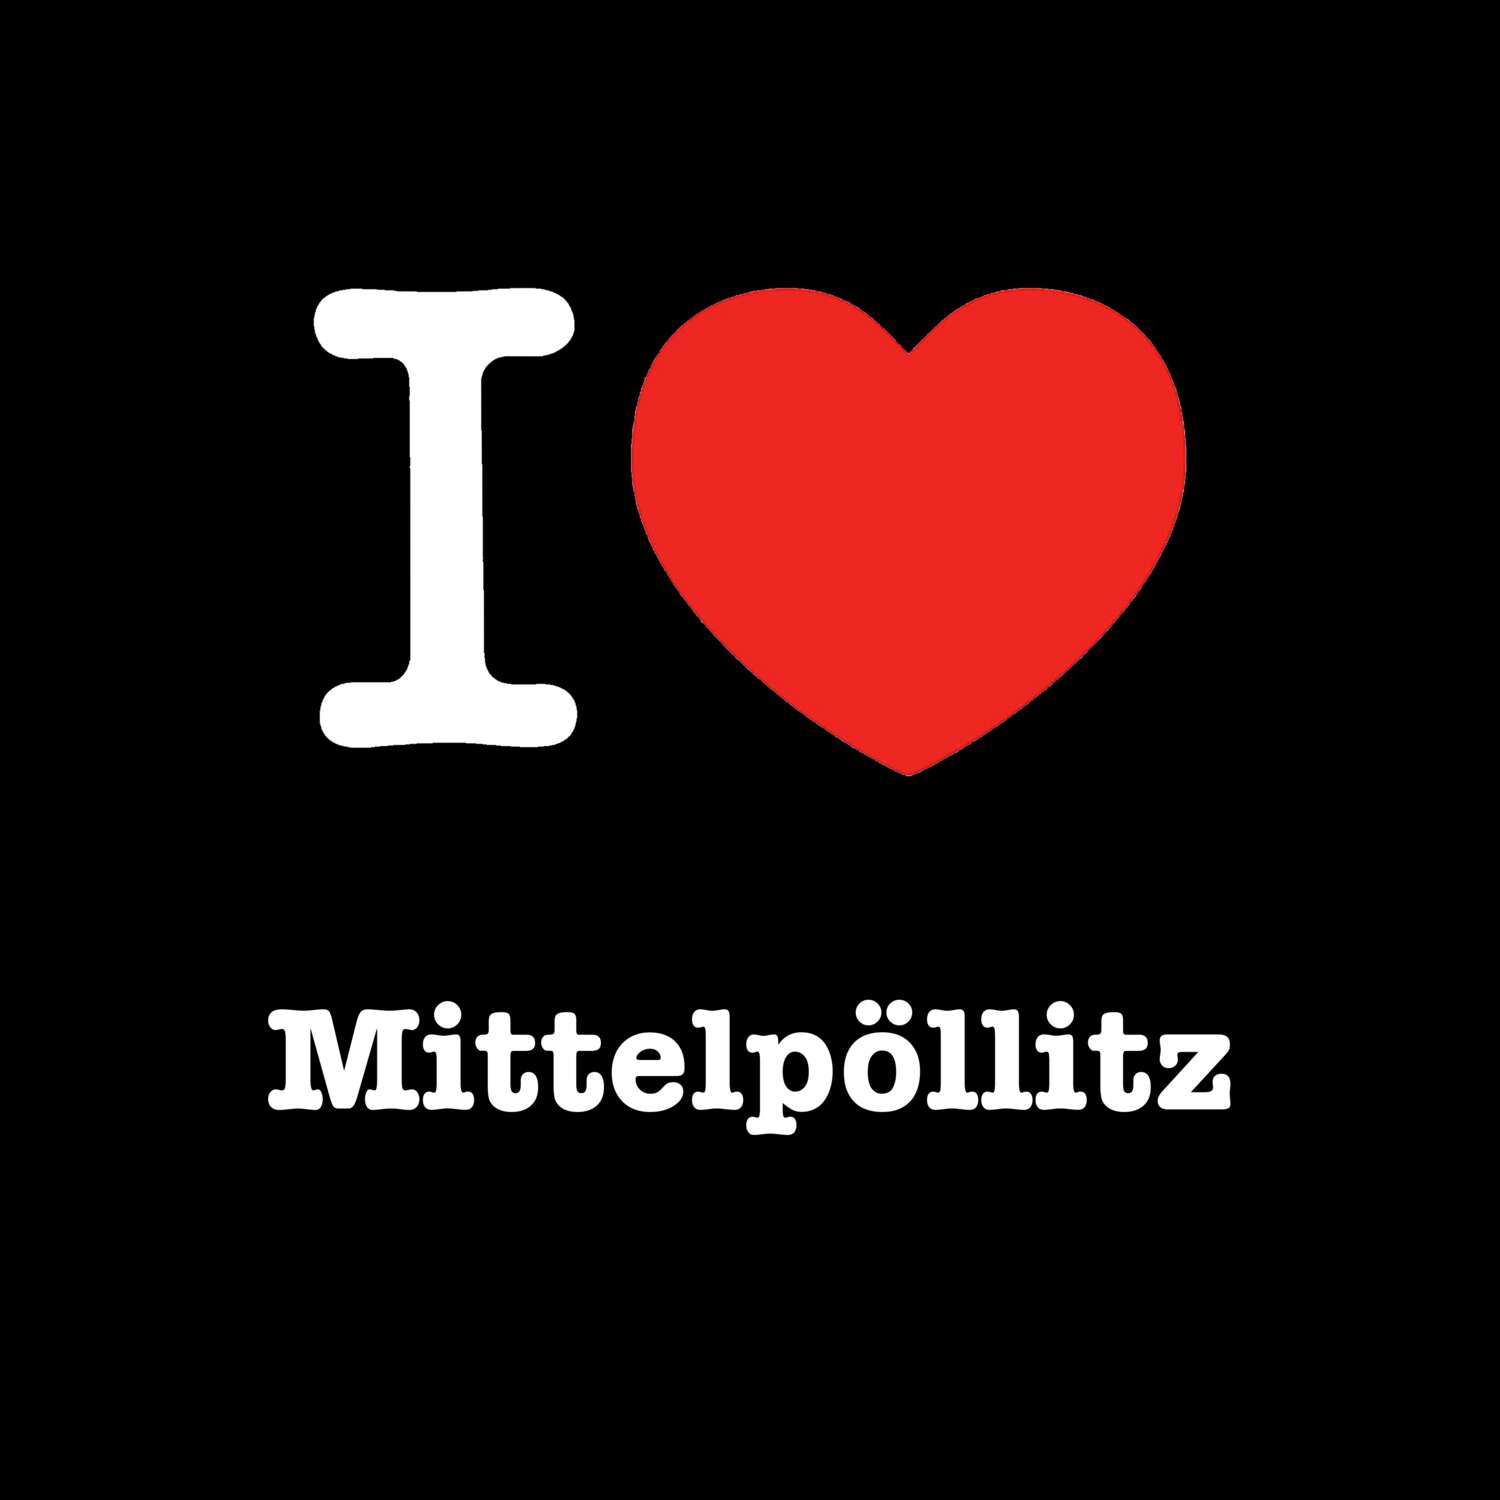 Mittelpöllitz T-Shirt »I love«